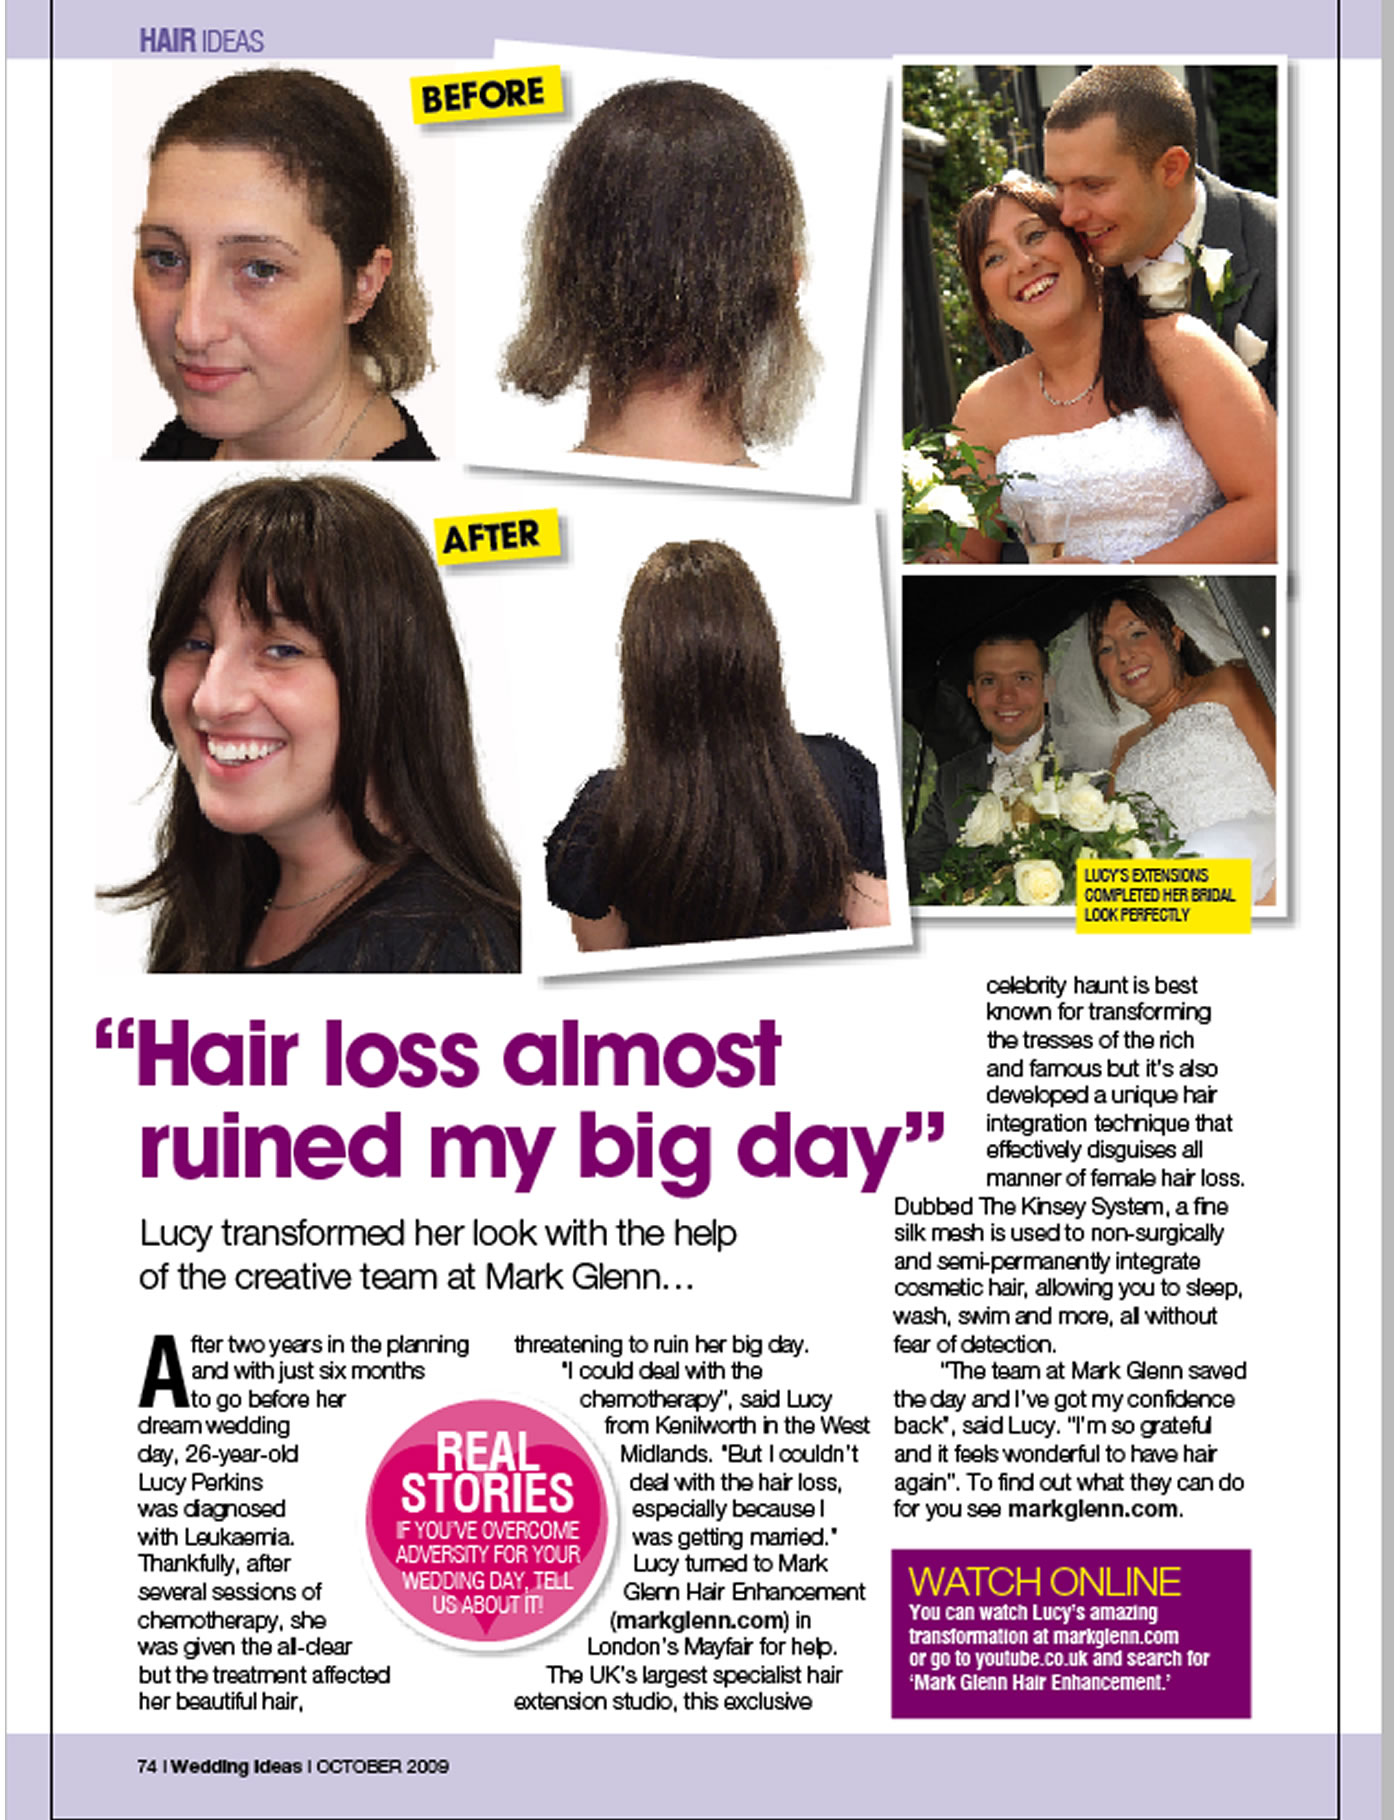 Wedding Ideas Magazine - 'Hair Loss Almost Ruined My Big Day' - Mark Glenn Hair Enhancement review